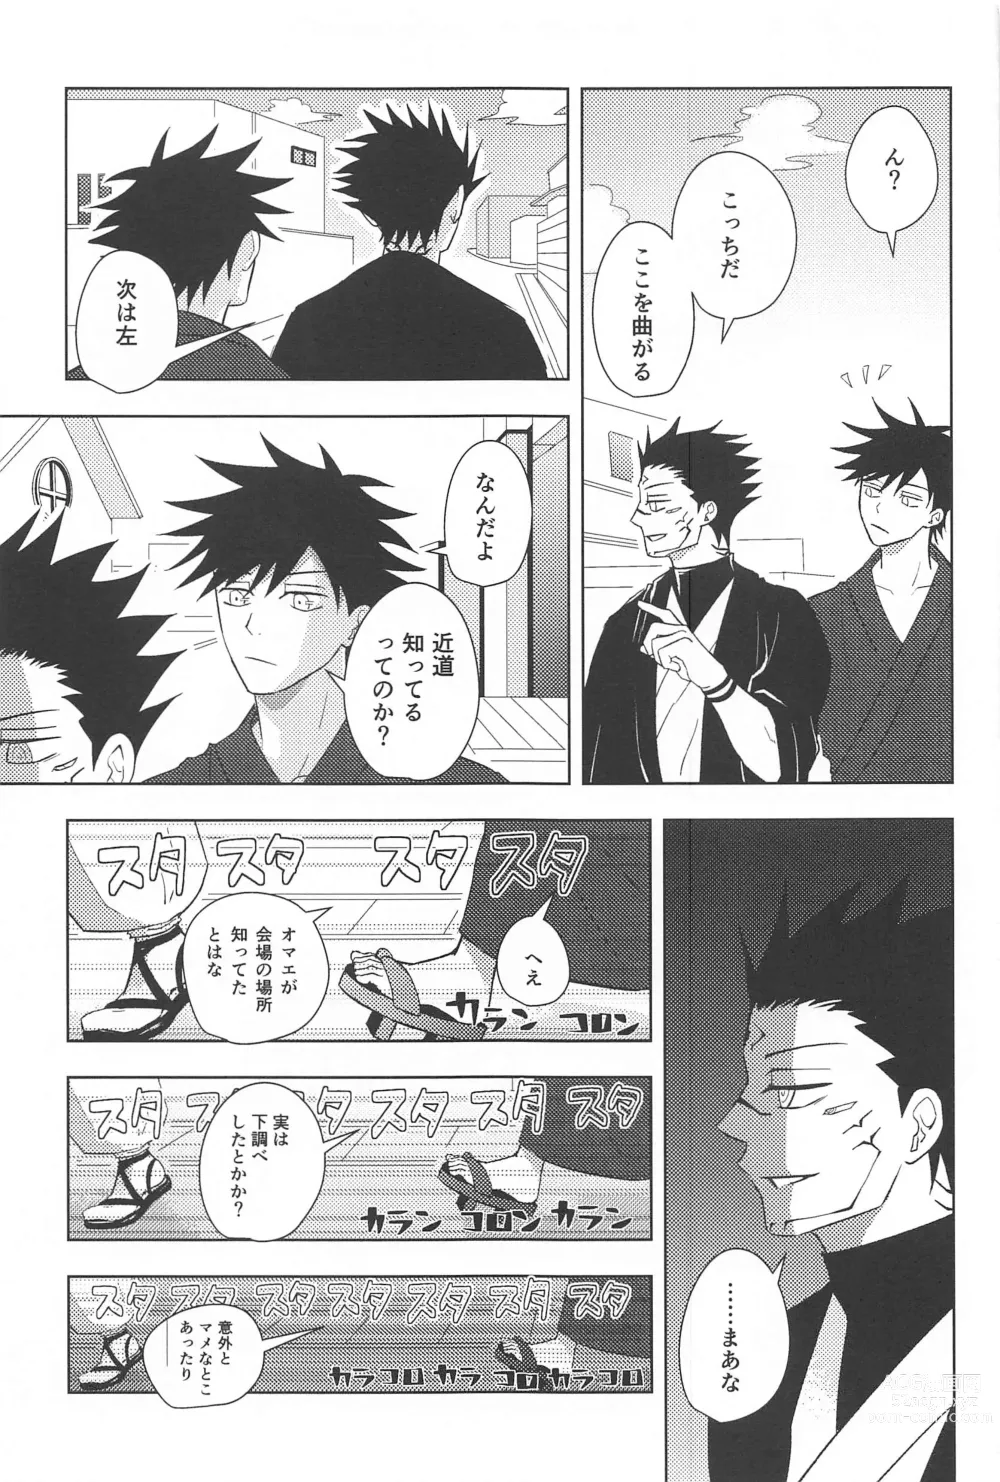 Page 13 of doujinshi Kakurega nite